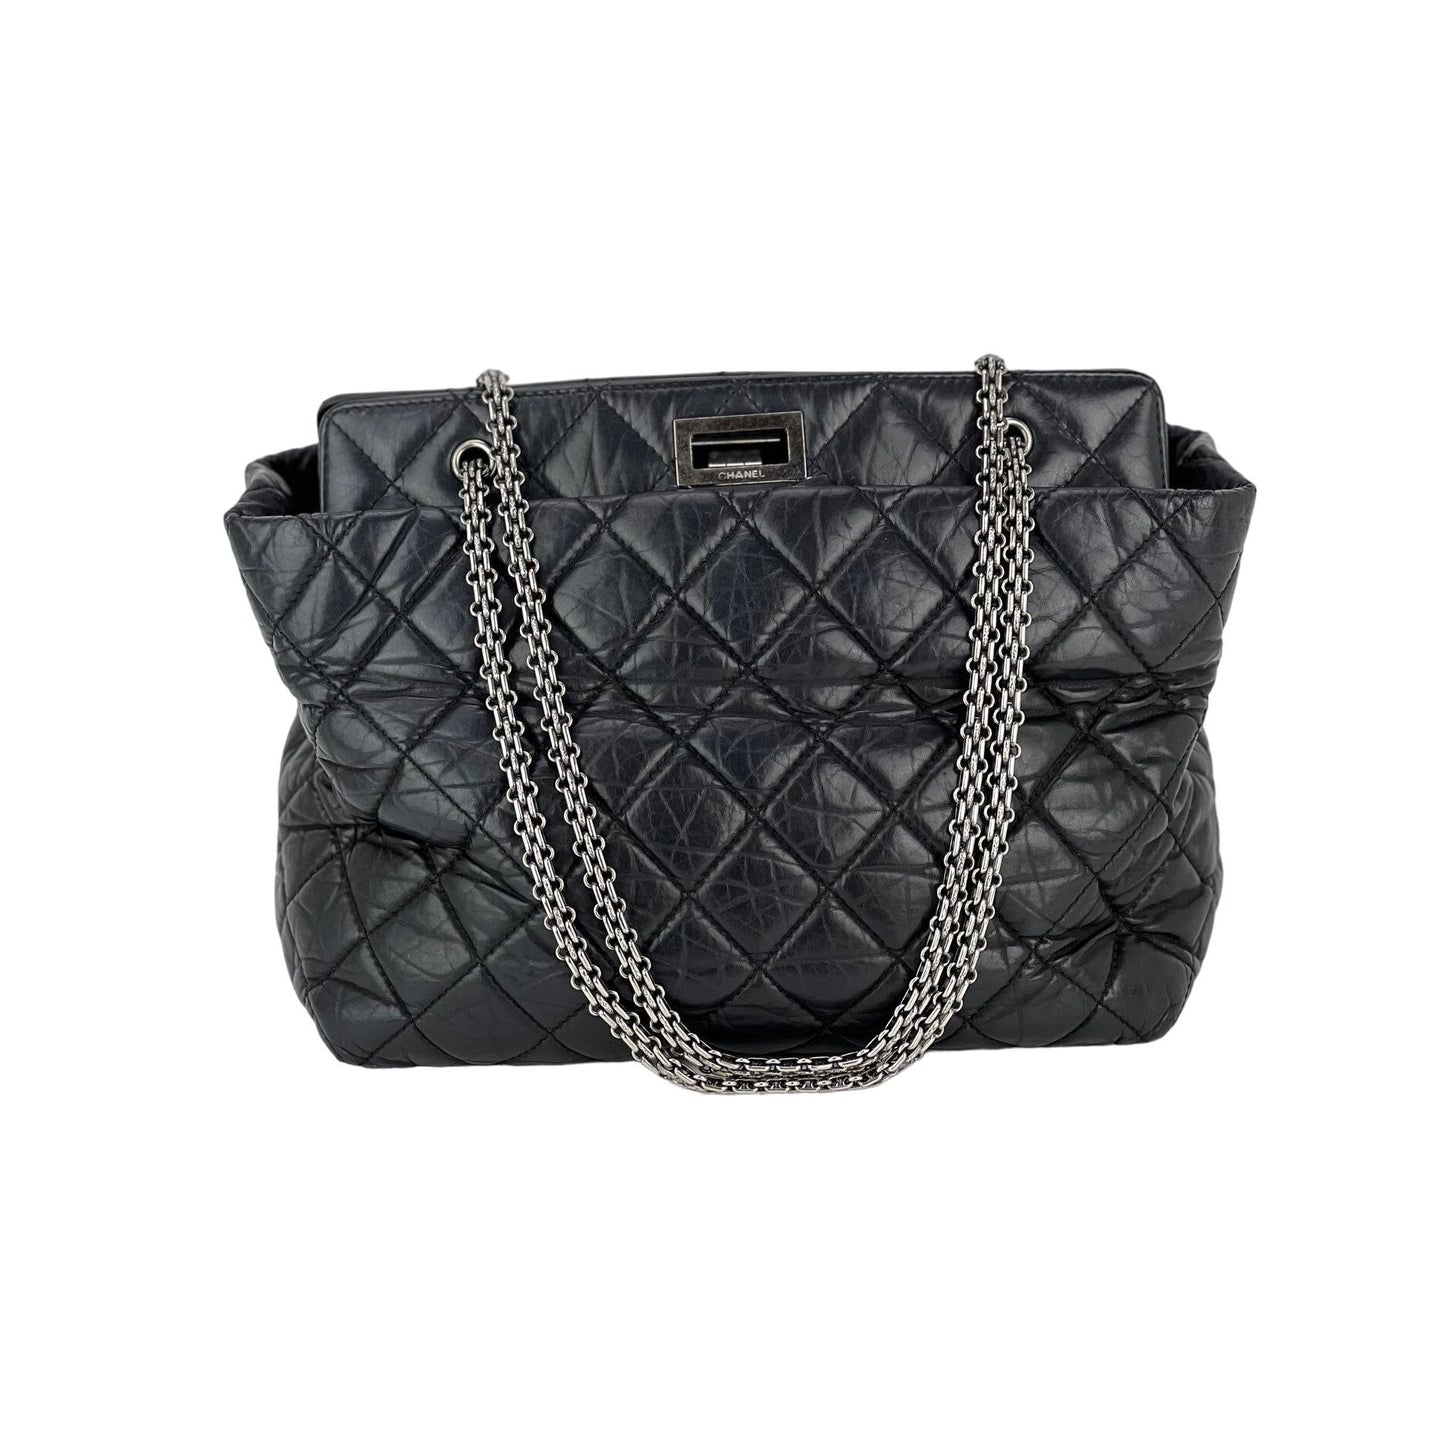 Chanel 2.55 Reissue Aged Calfskin Black Tote Bag